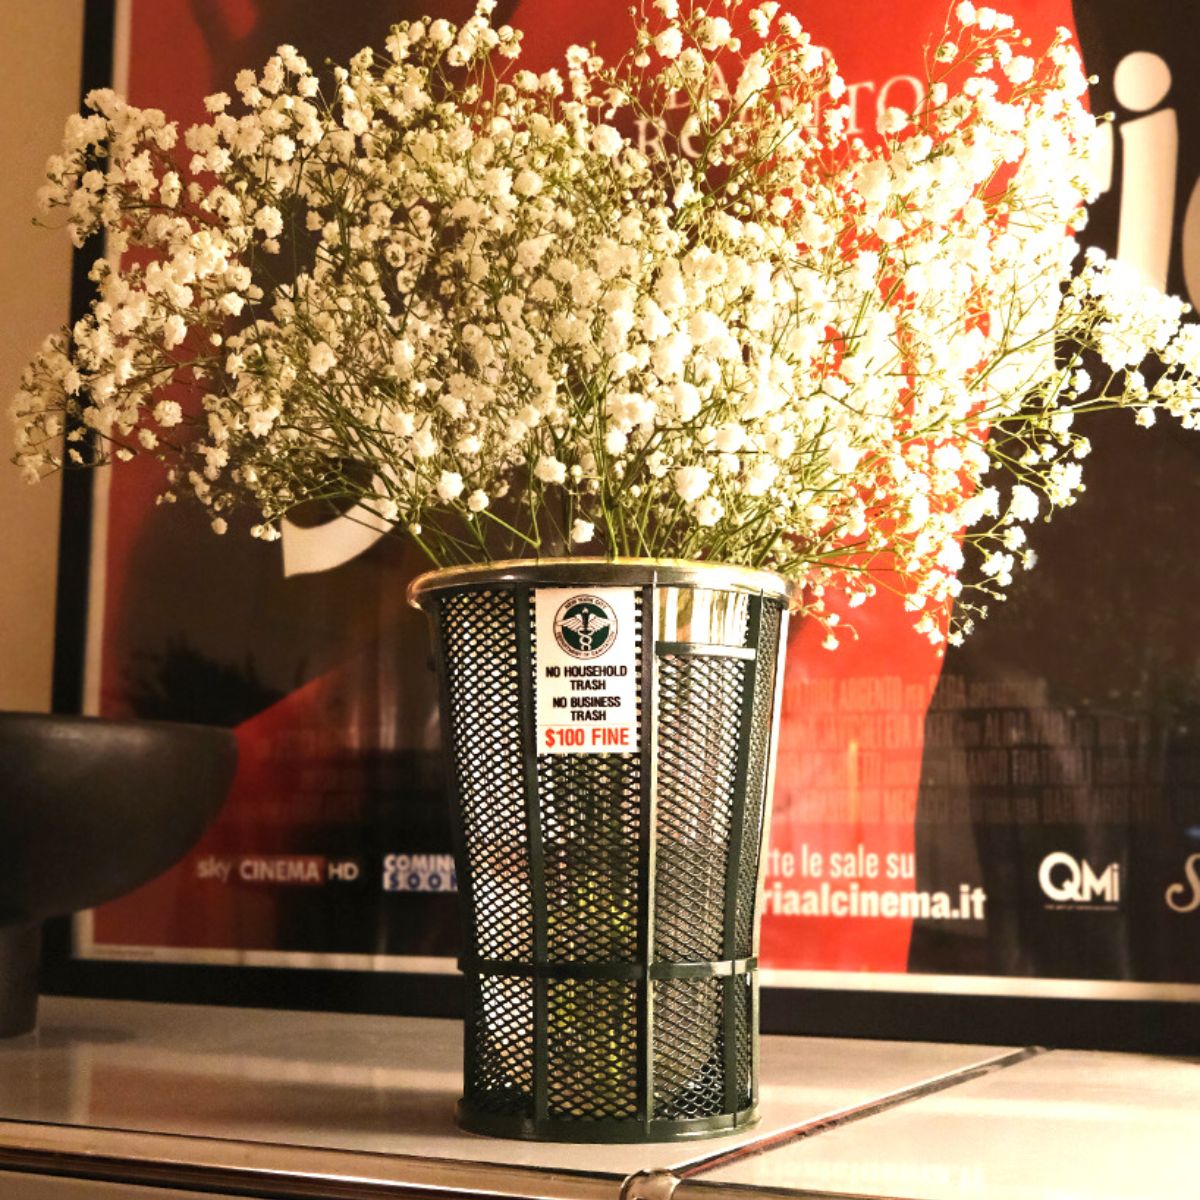 Chris Luu creates flower vase trashcan concept